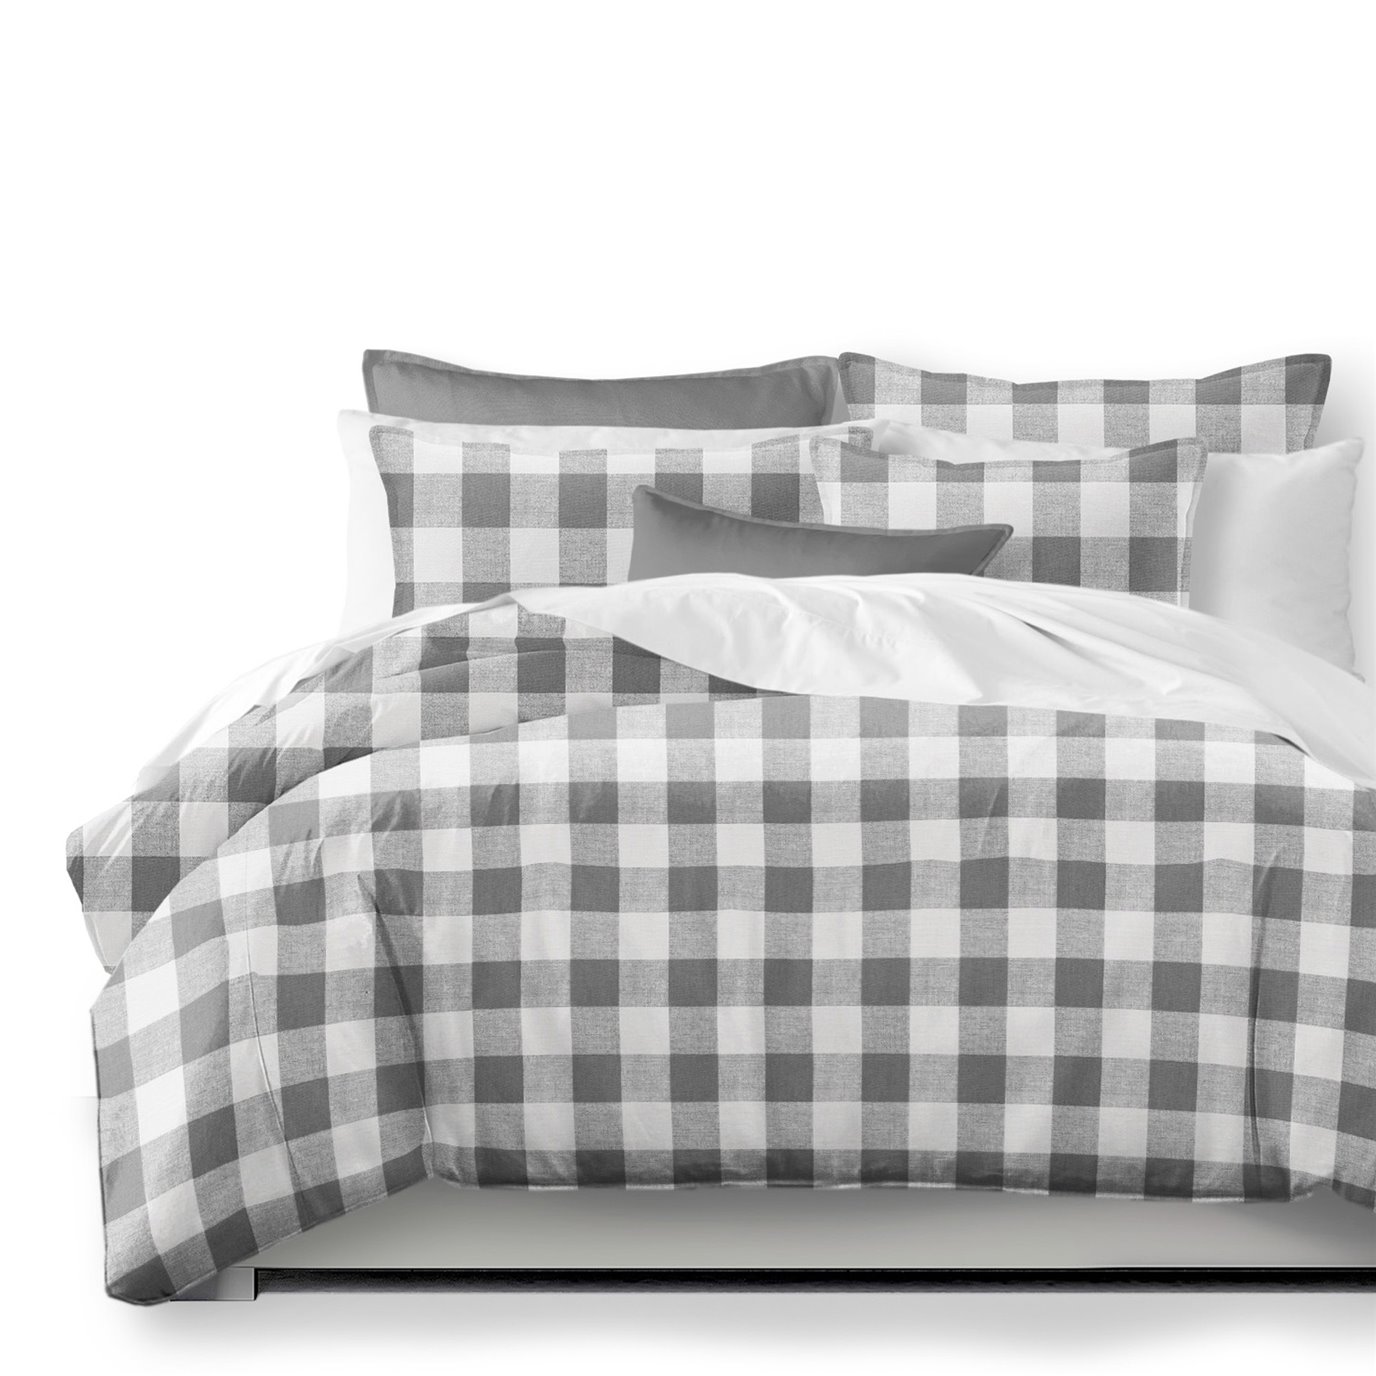 Lumberjack Check Gray/White Coverlet and Pillow Sham(s) Set - Size Super King